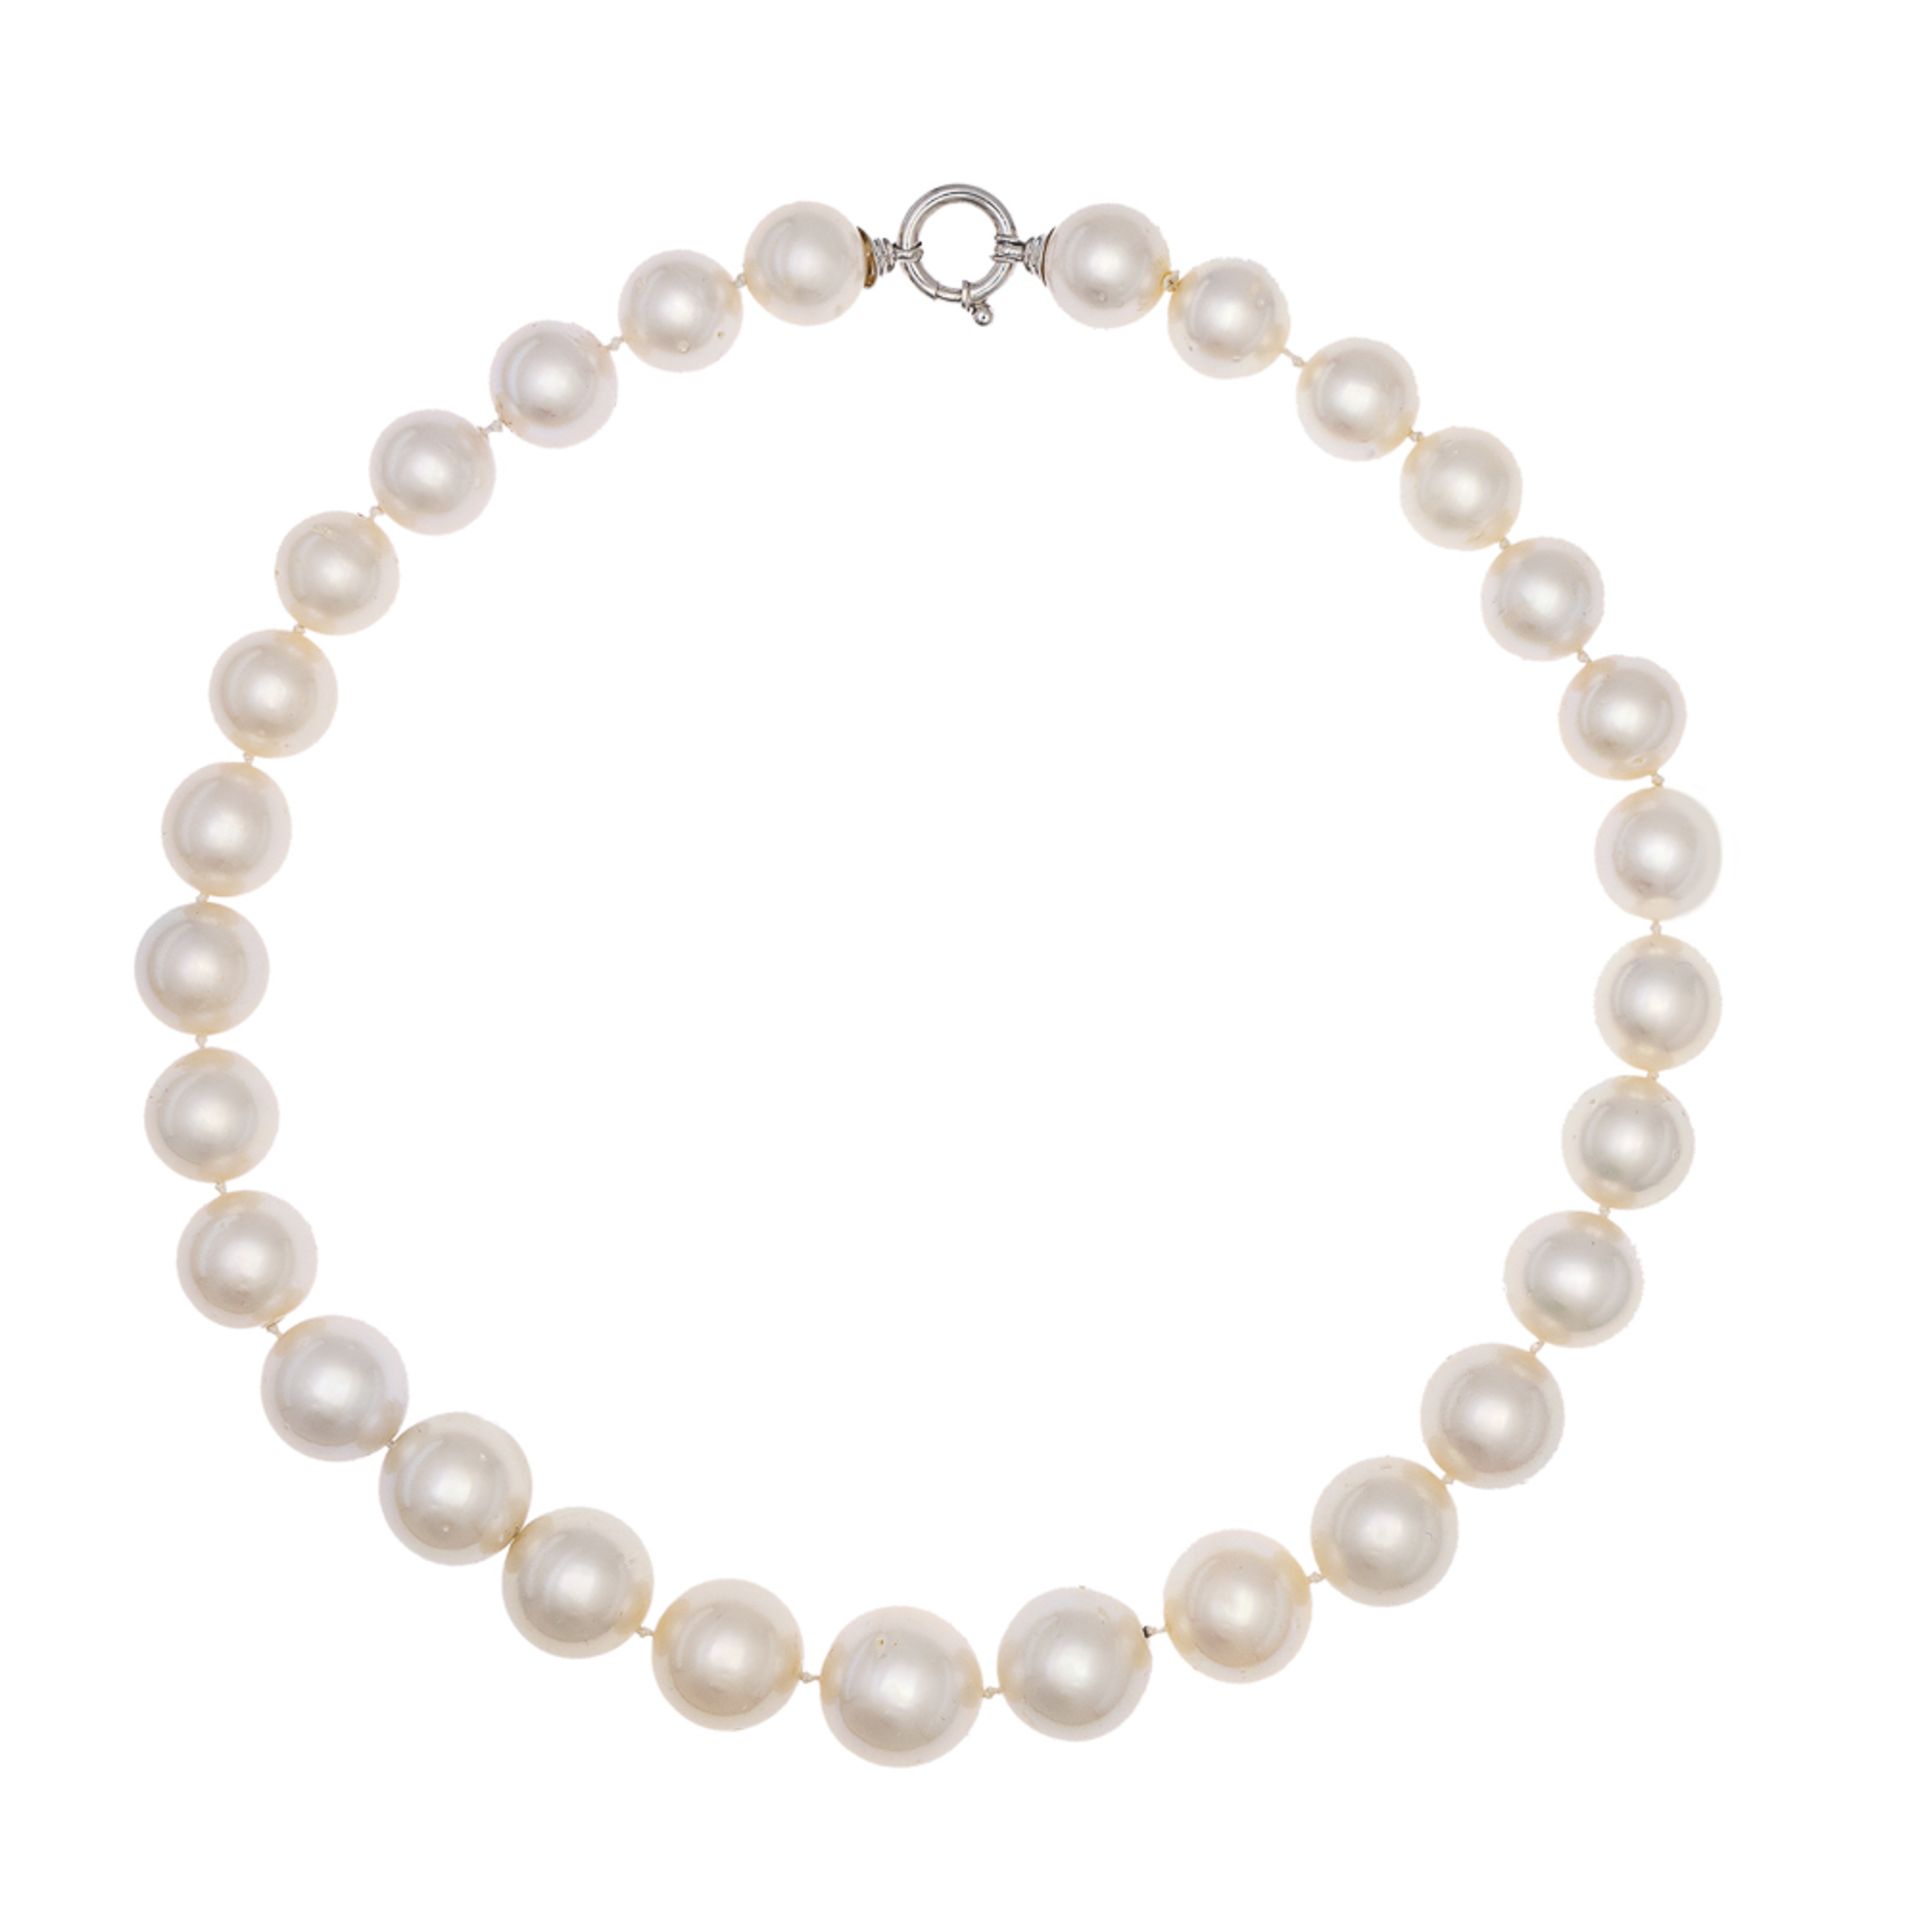 Single strand South Sea pearl necklace